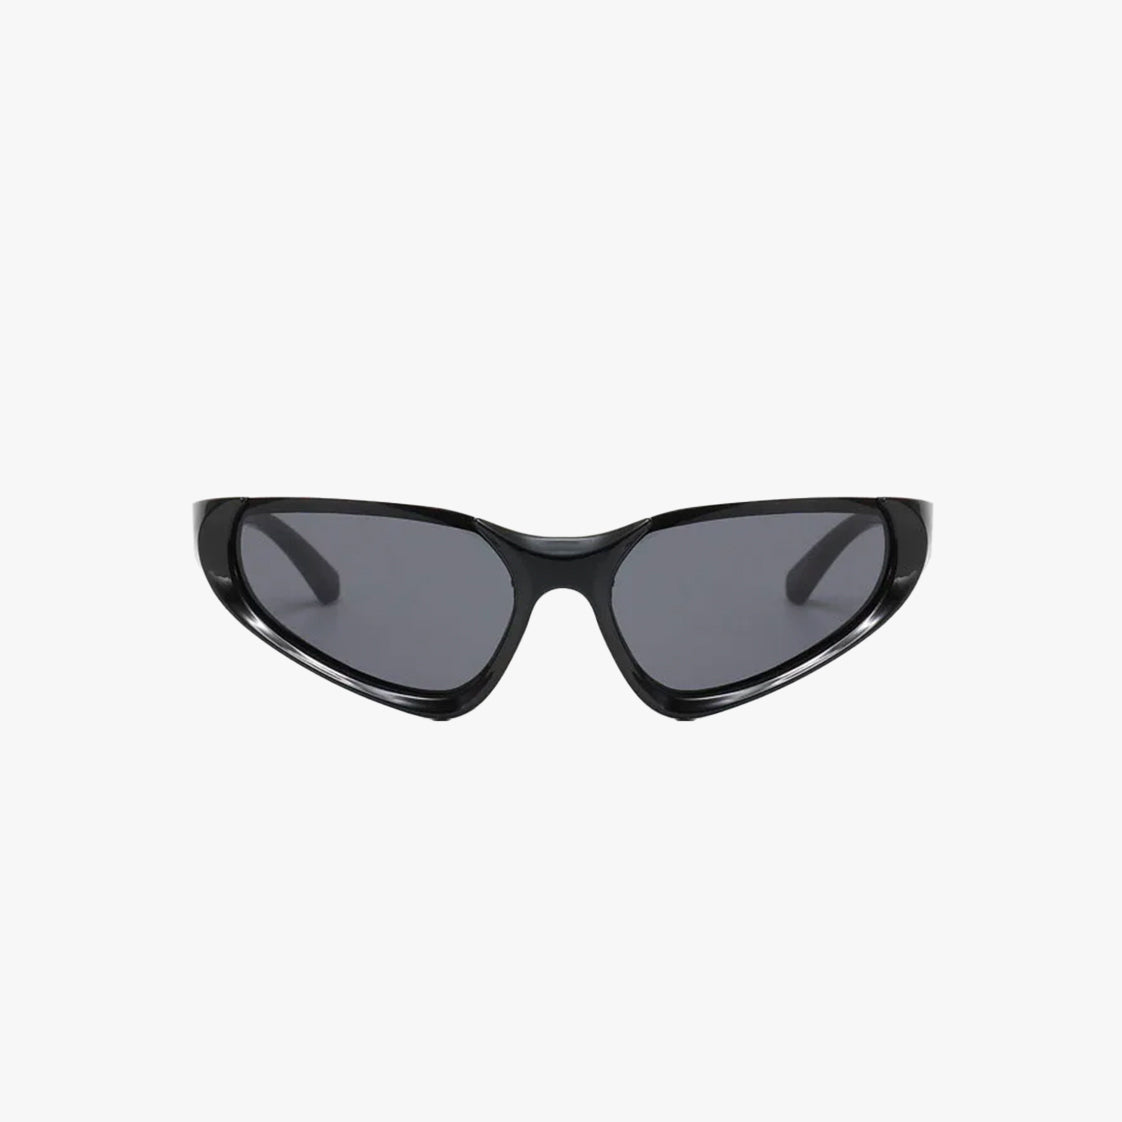 Futurista Cateye Sunglasses